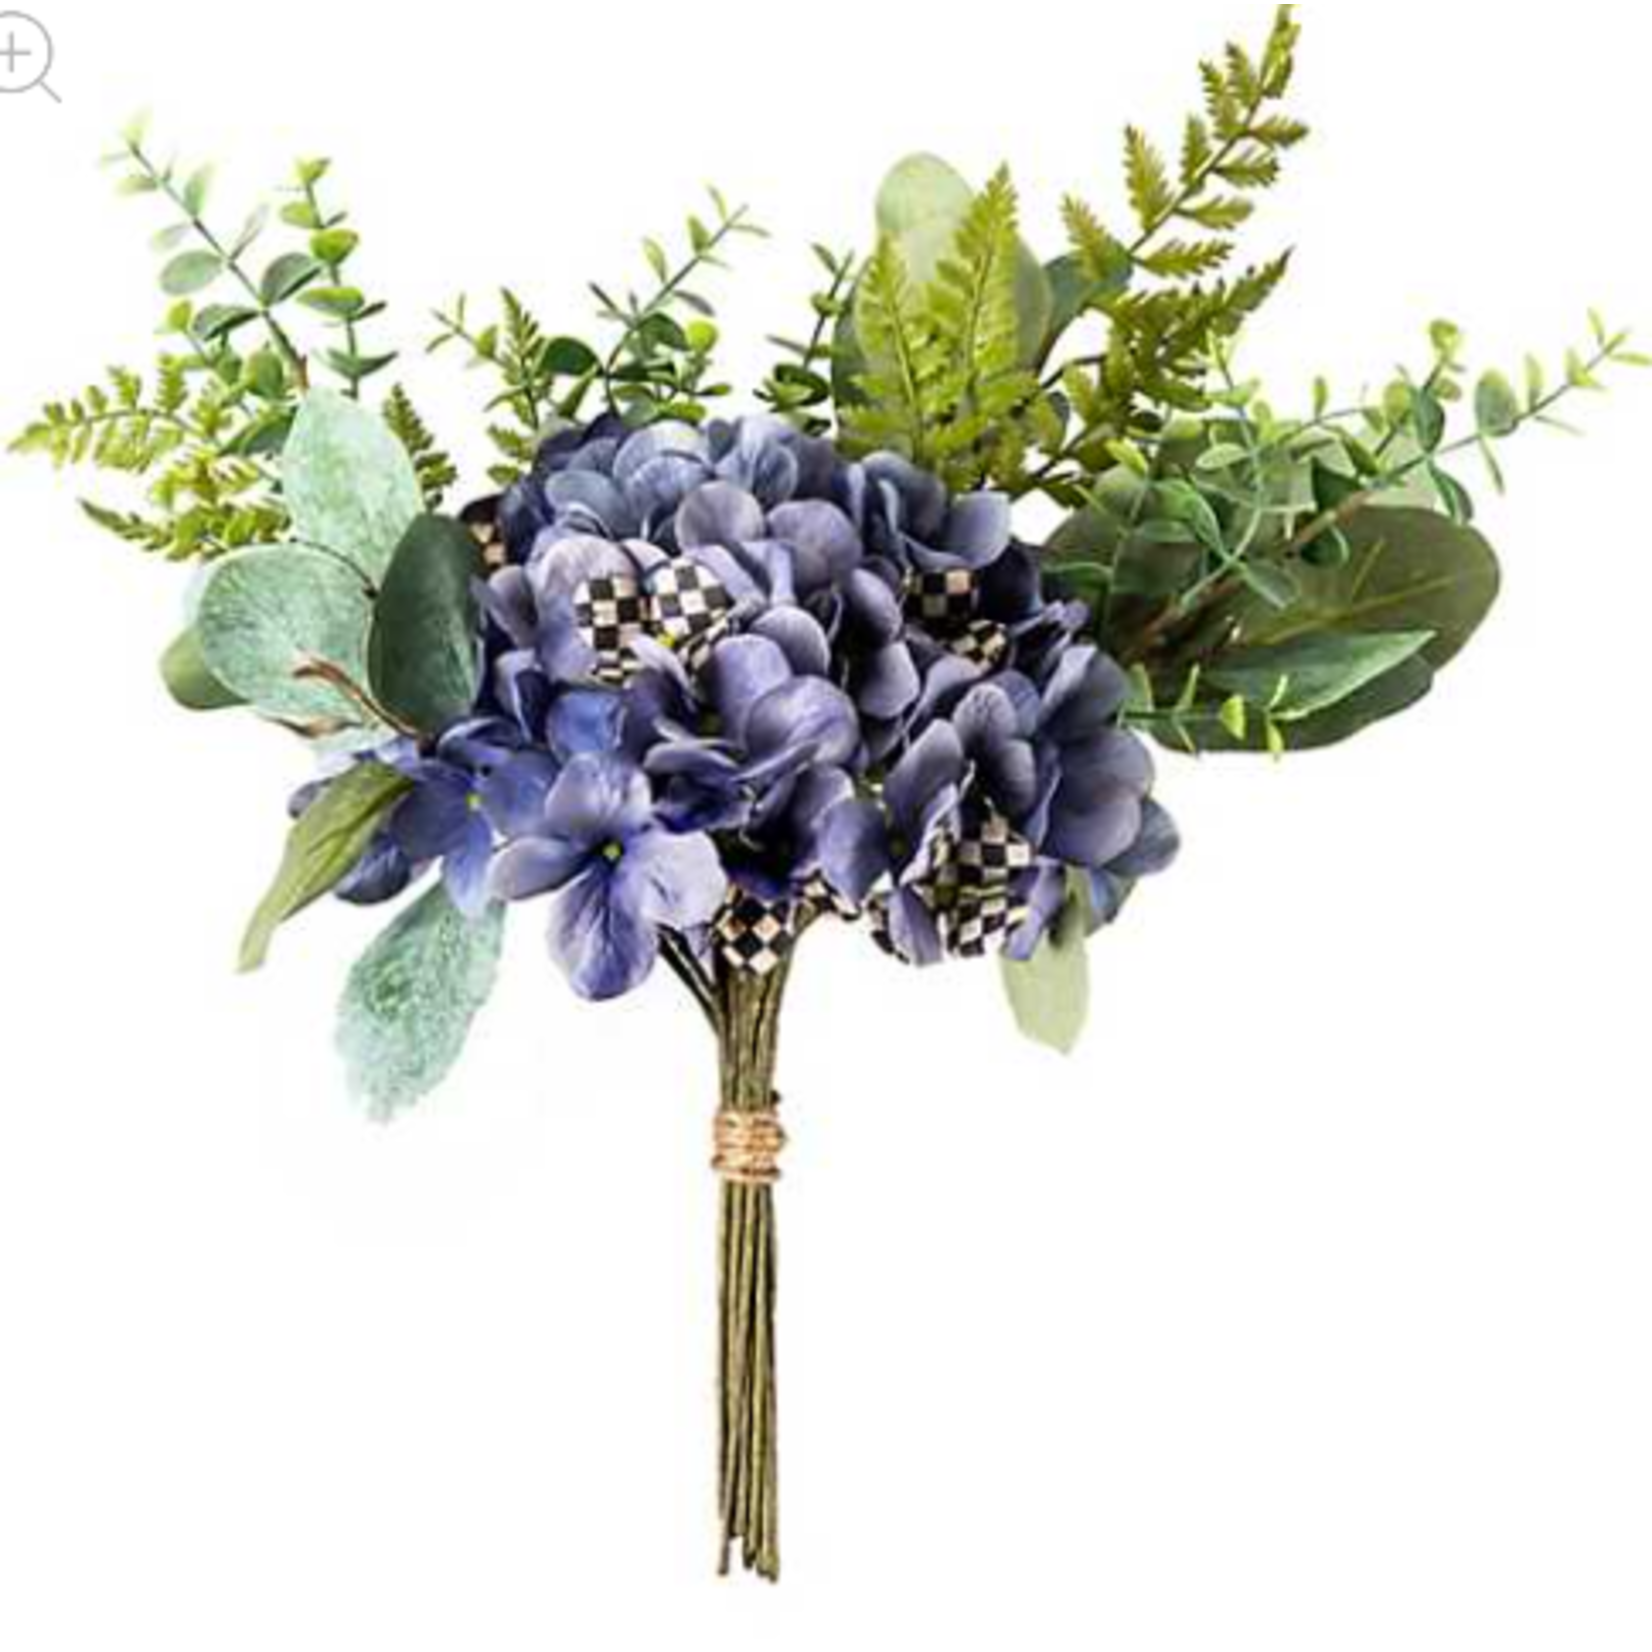 purple hydrangea arrangement